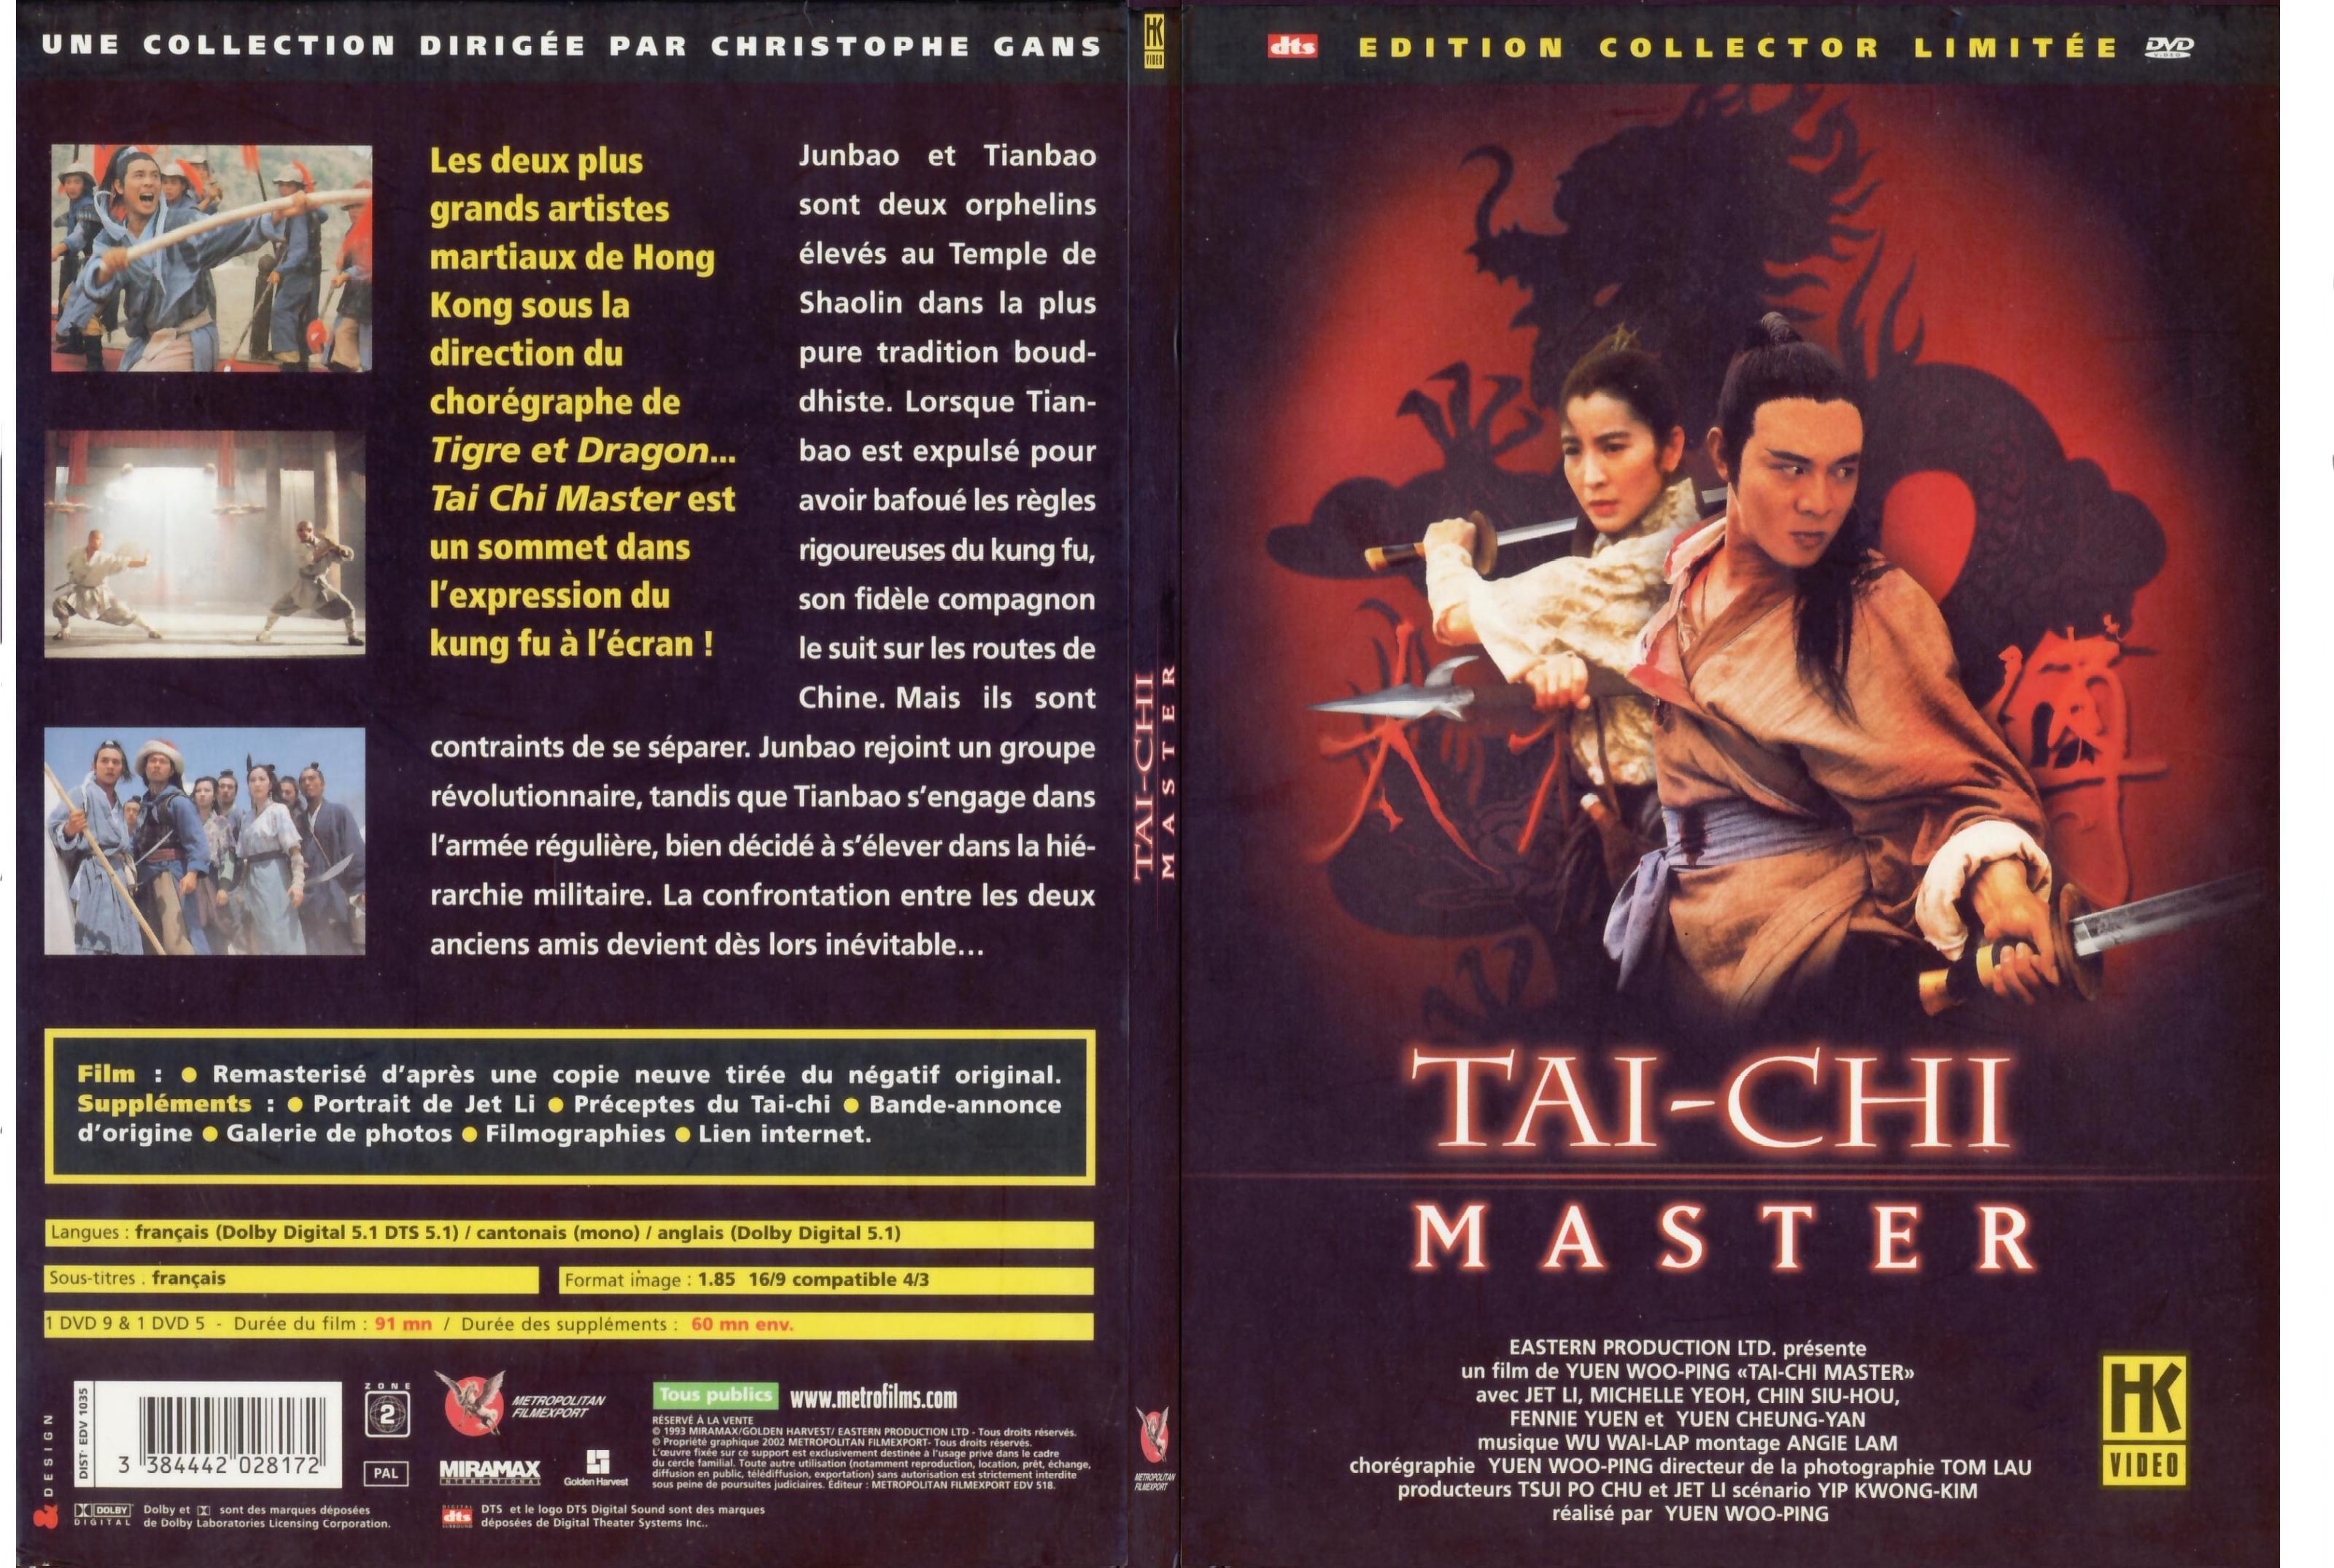 Jaquette DVD Tai-Chi Master - SLIM